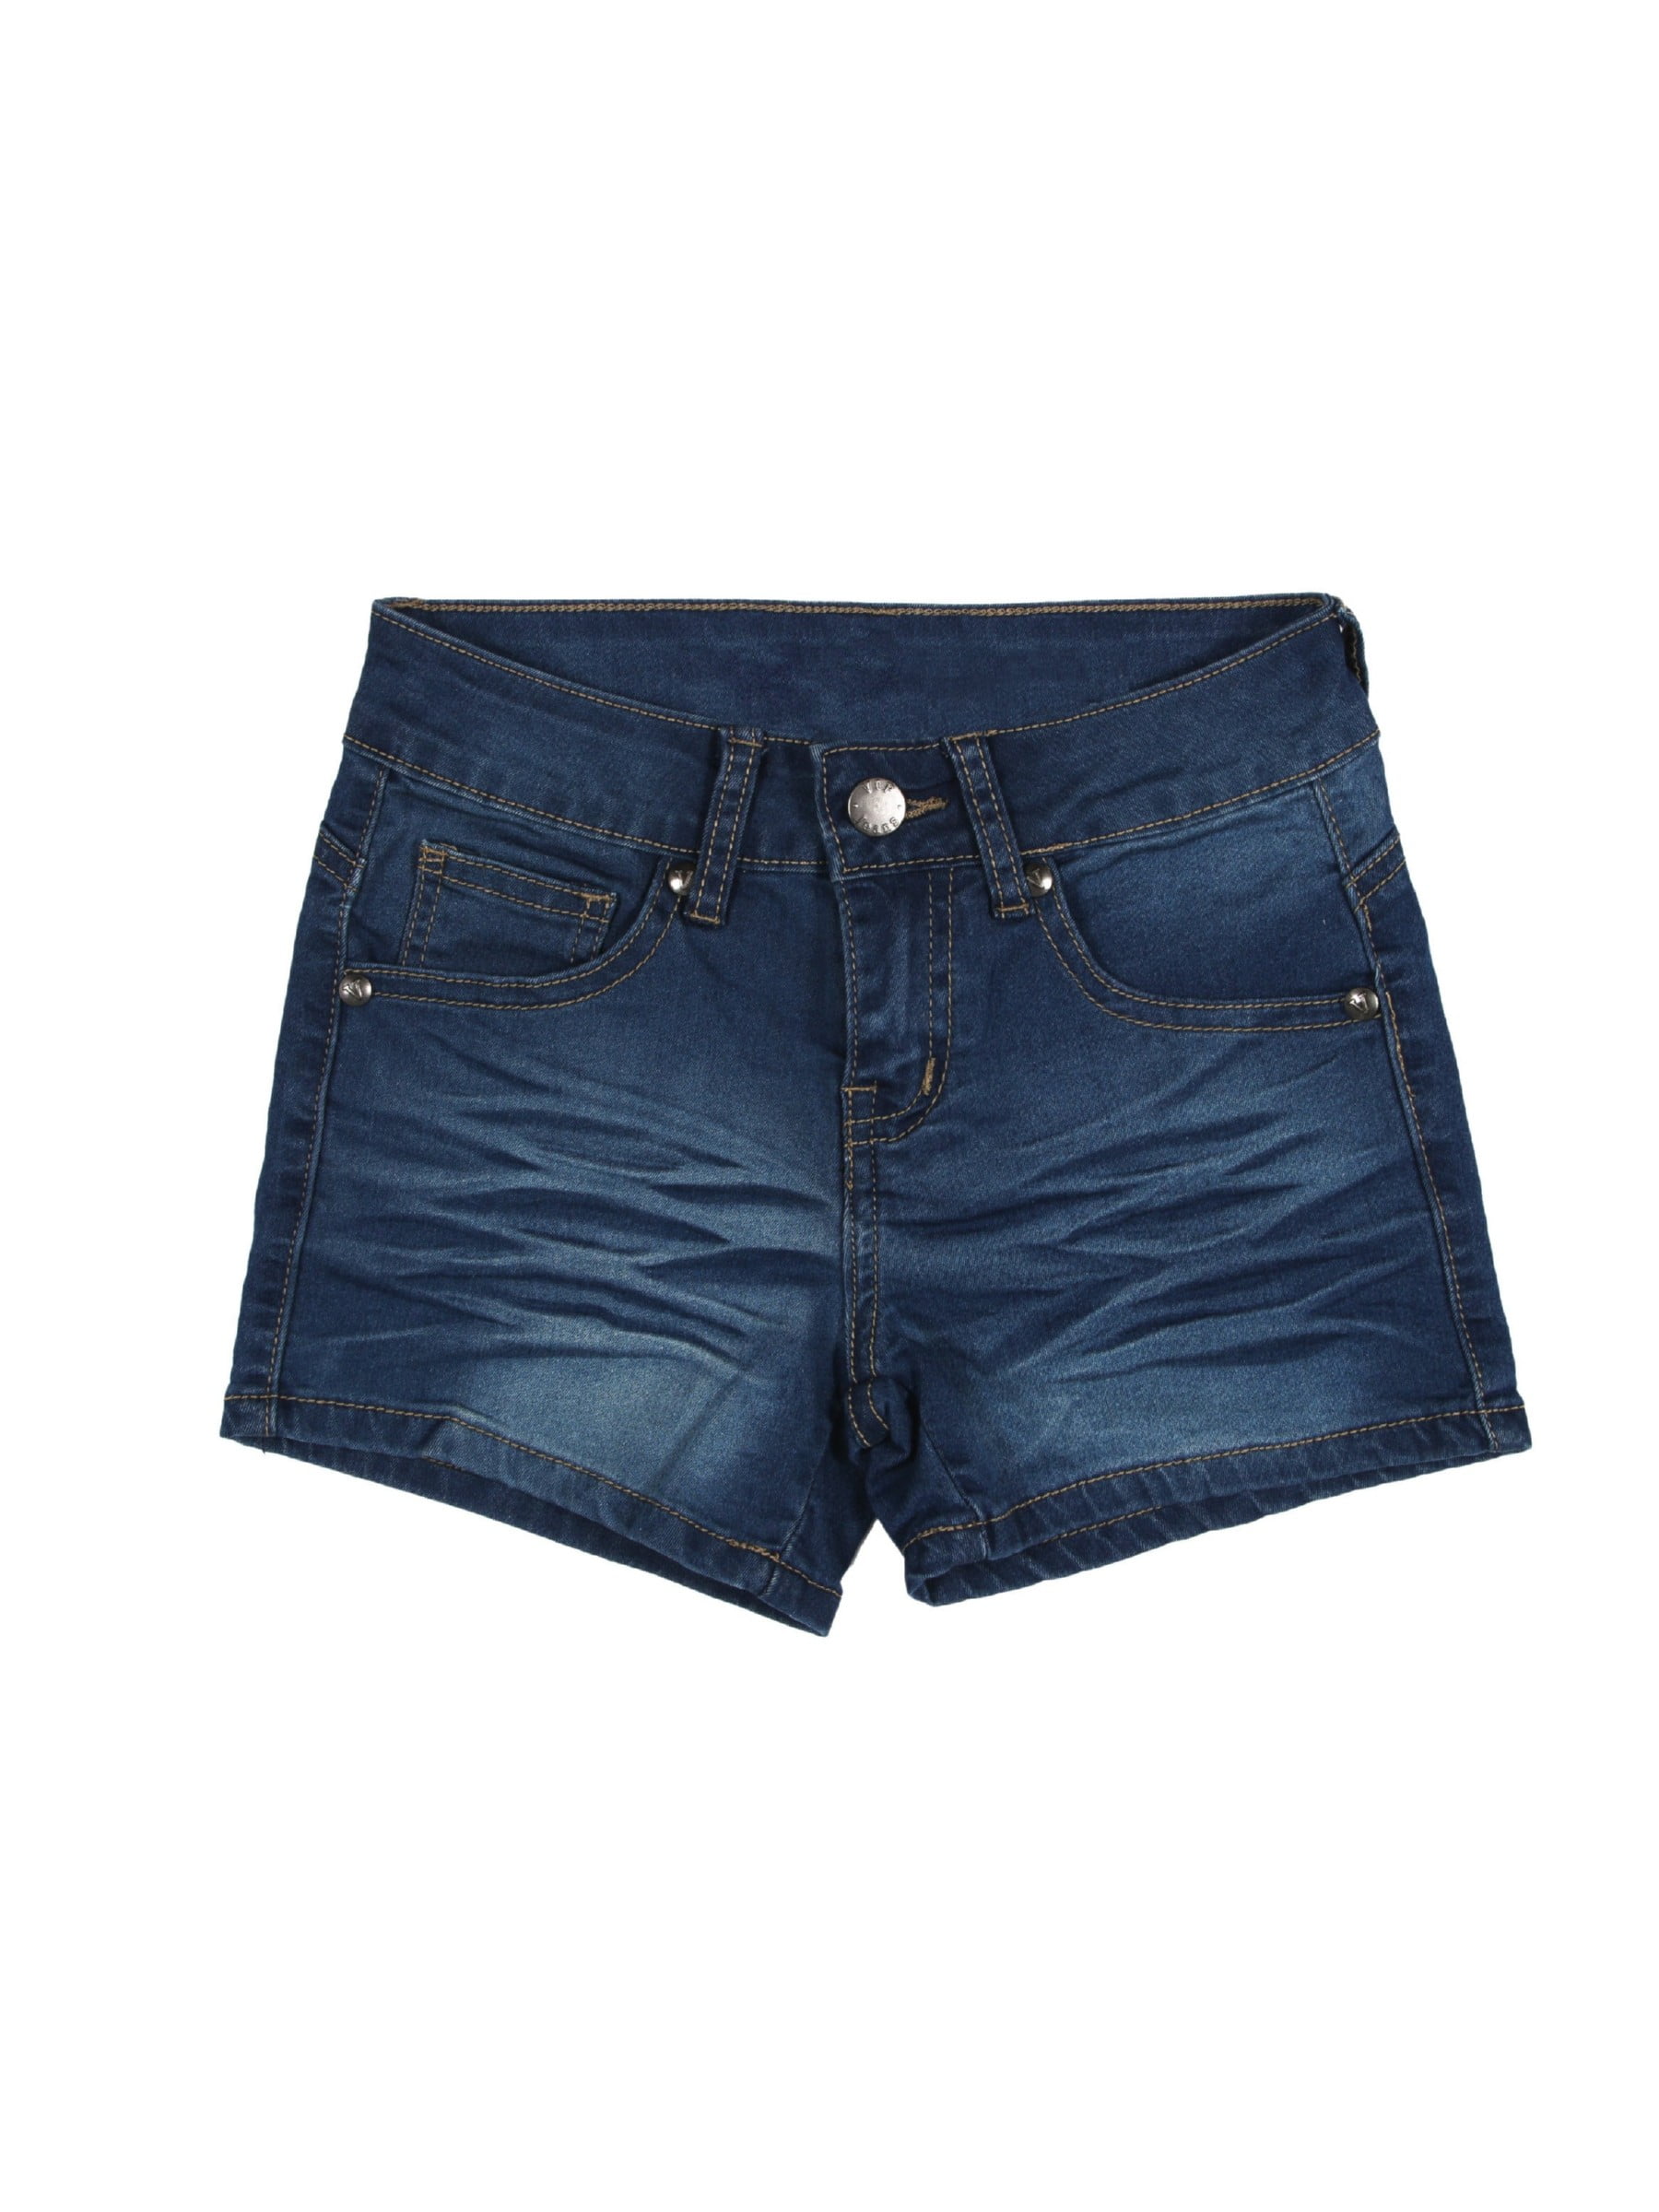 Girls Kids Stretch Pockets Skinny Denim Jeans Or Shorts (MLG1 ...